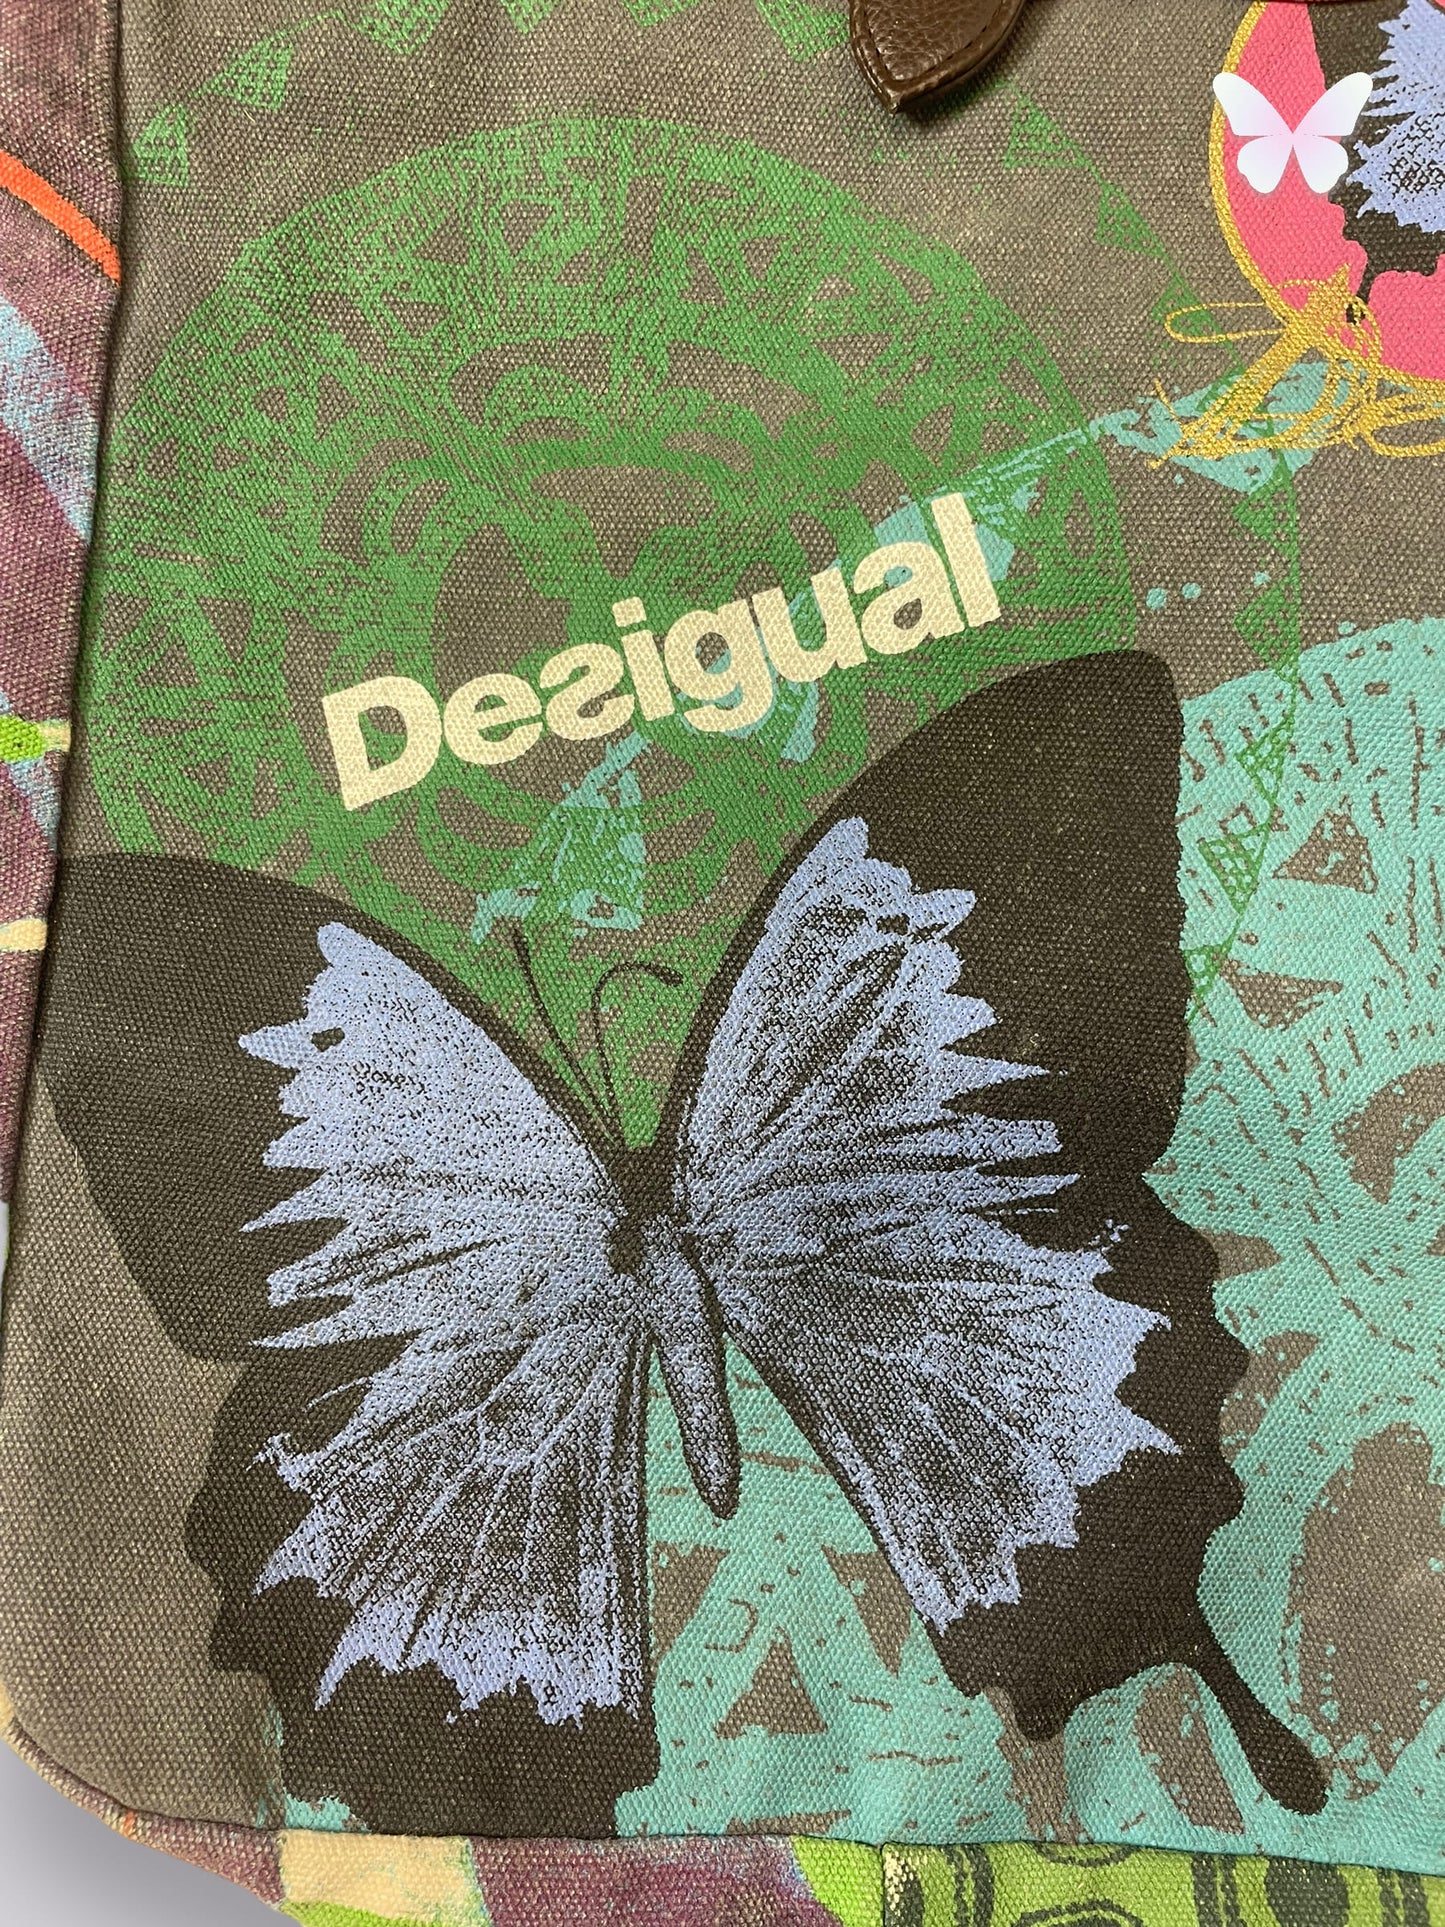 Desigual bag